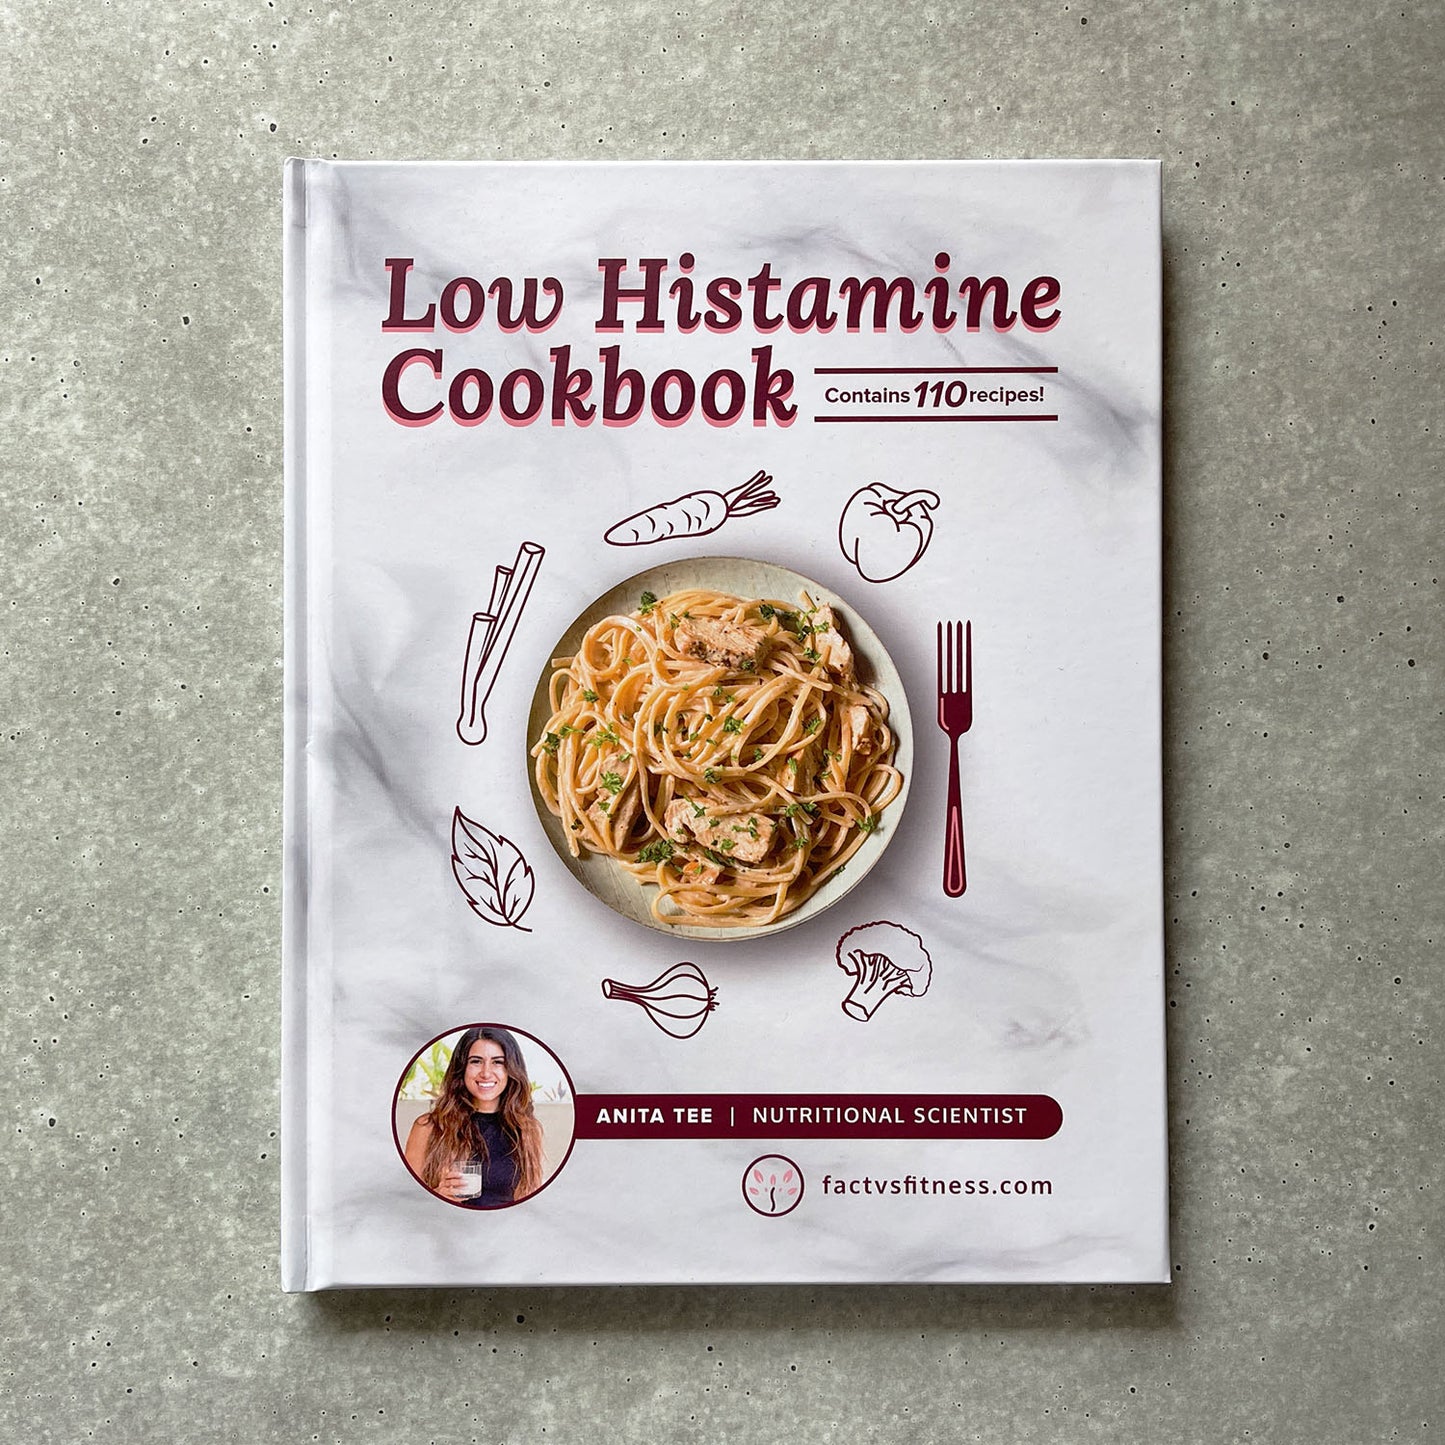 Low histamine cookbook – 110 recipes!